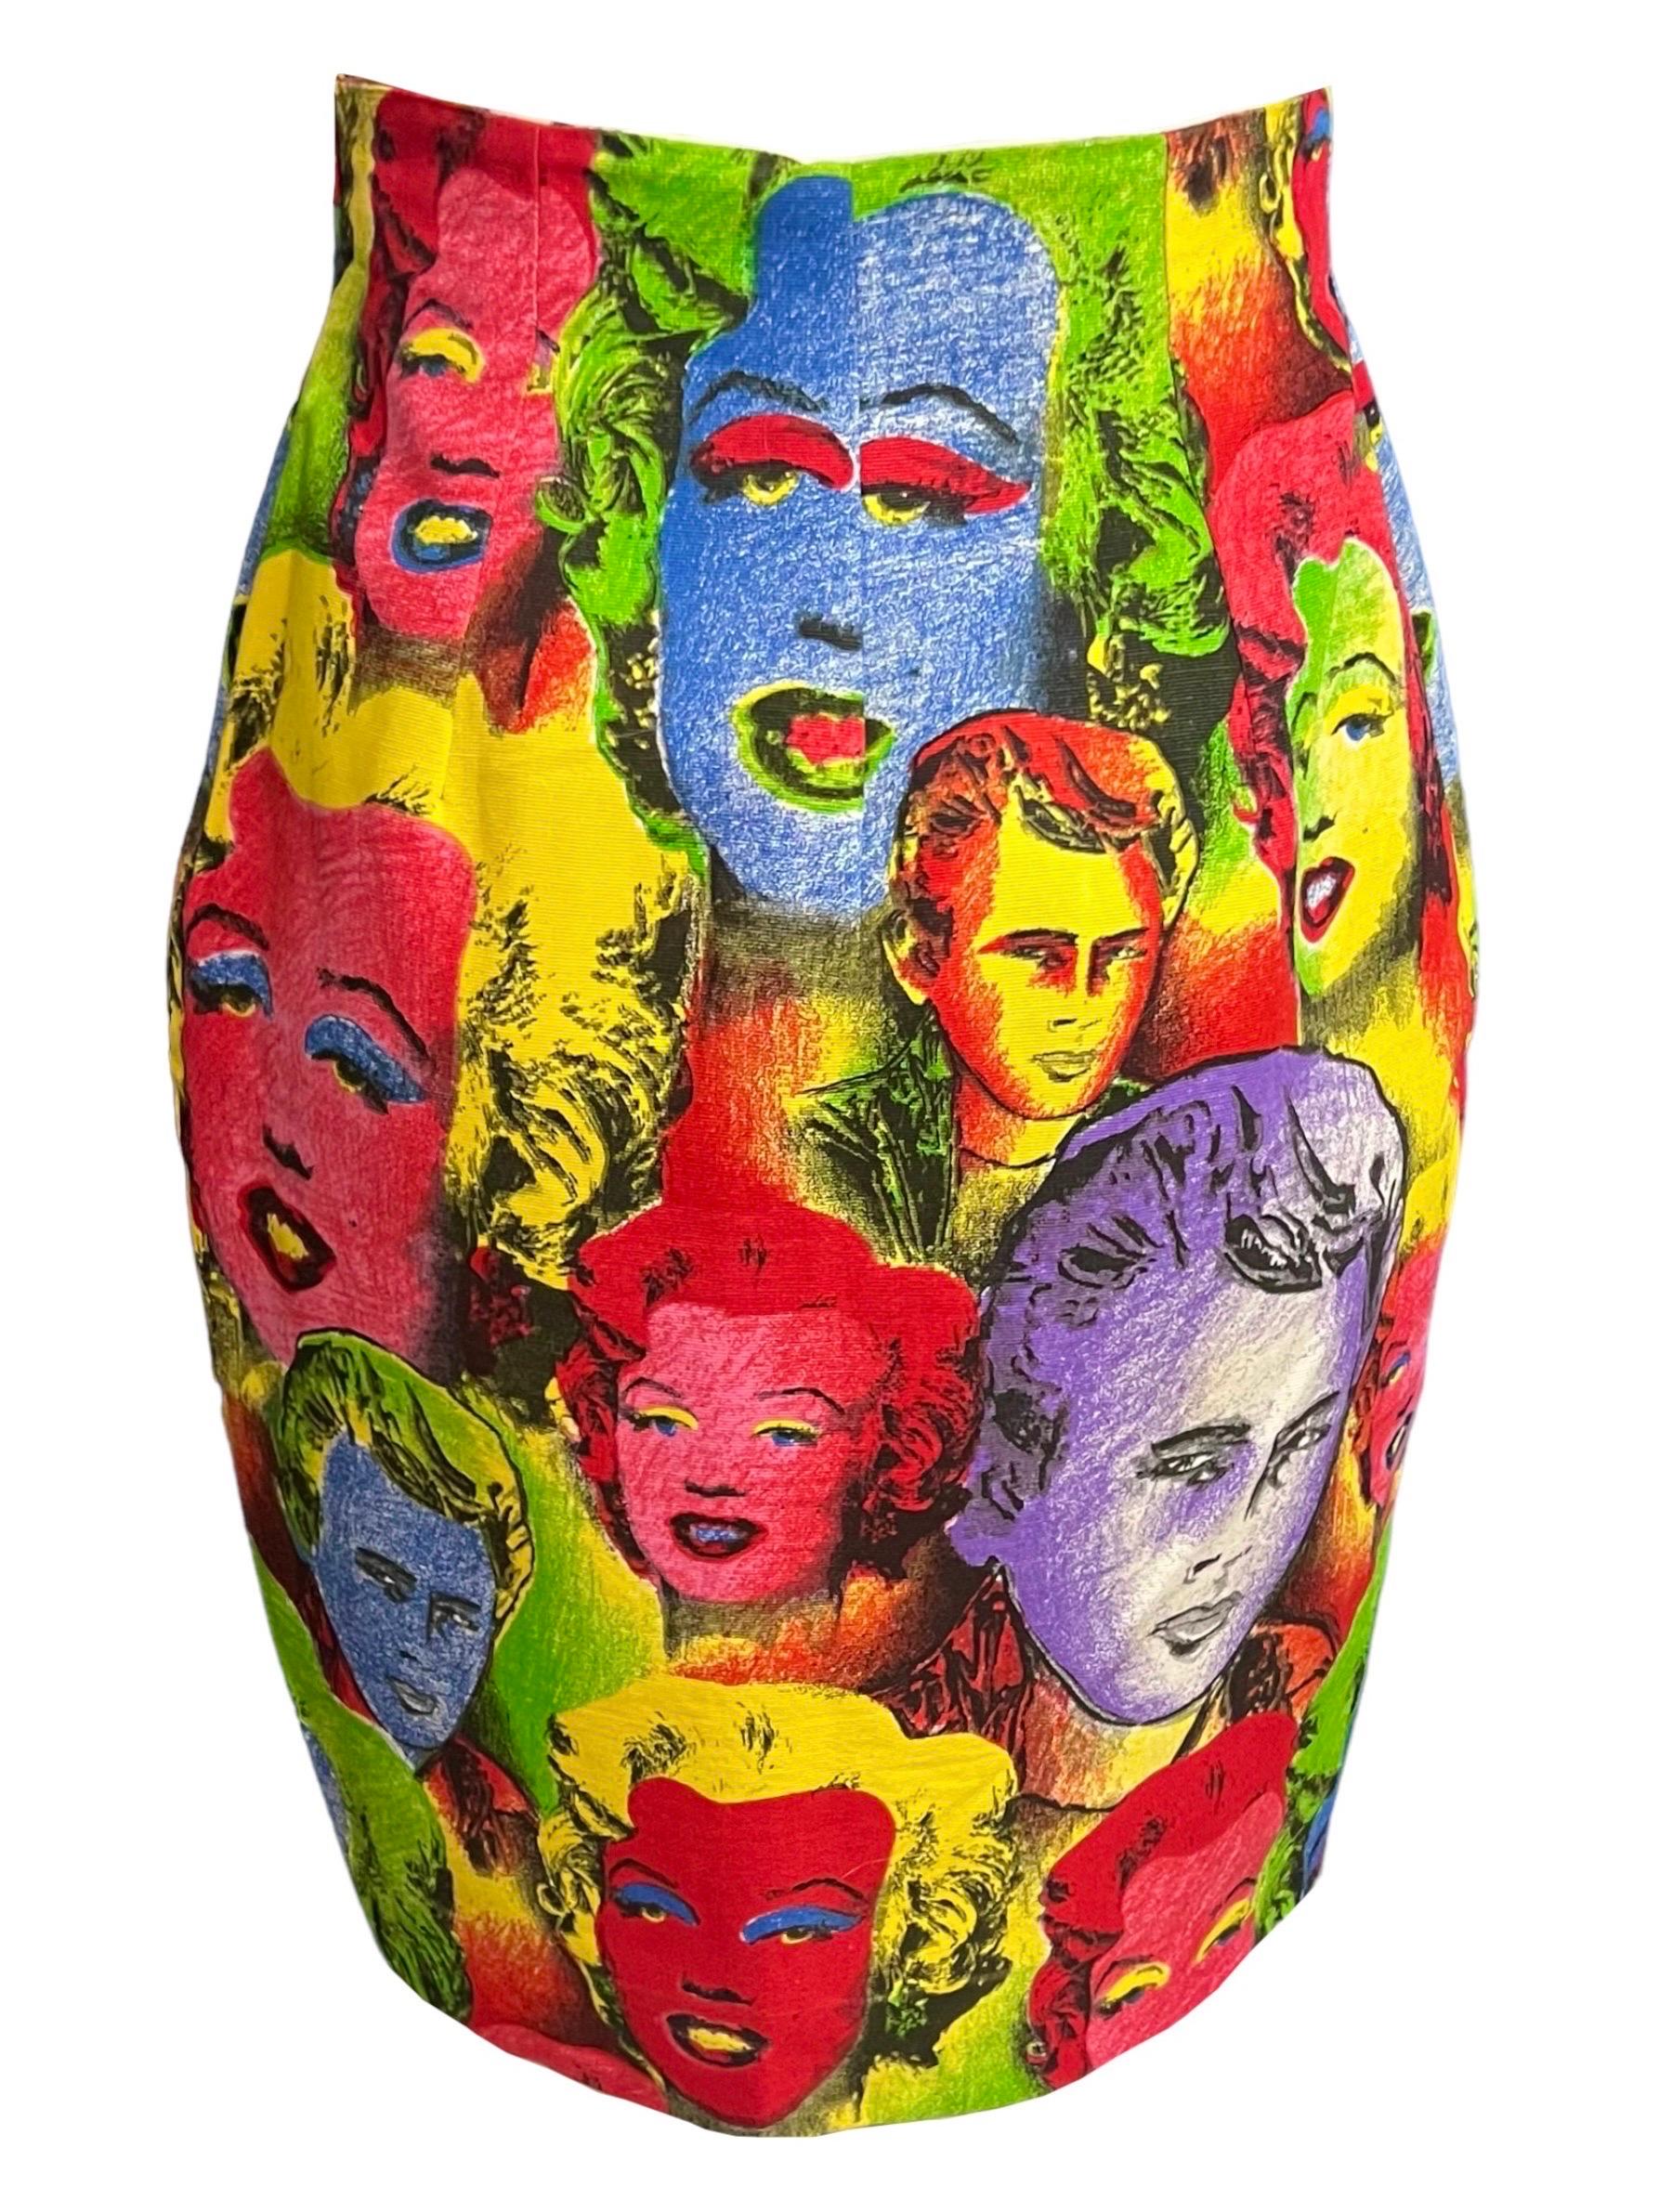 S/S 1991 Gianni Versace Marilyn Monroe James Dean Warhol Printed Skirt For Sale 2